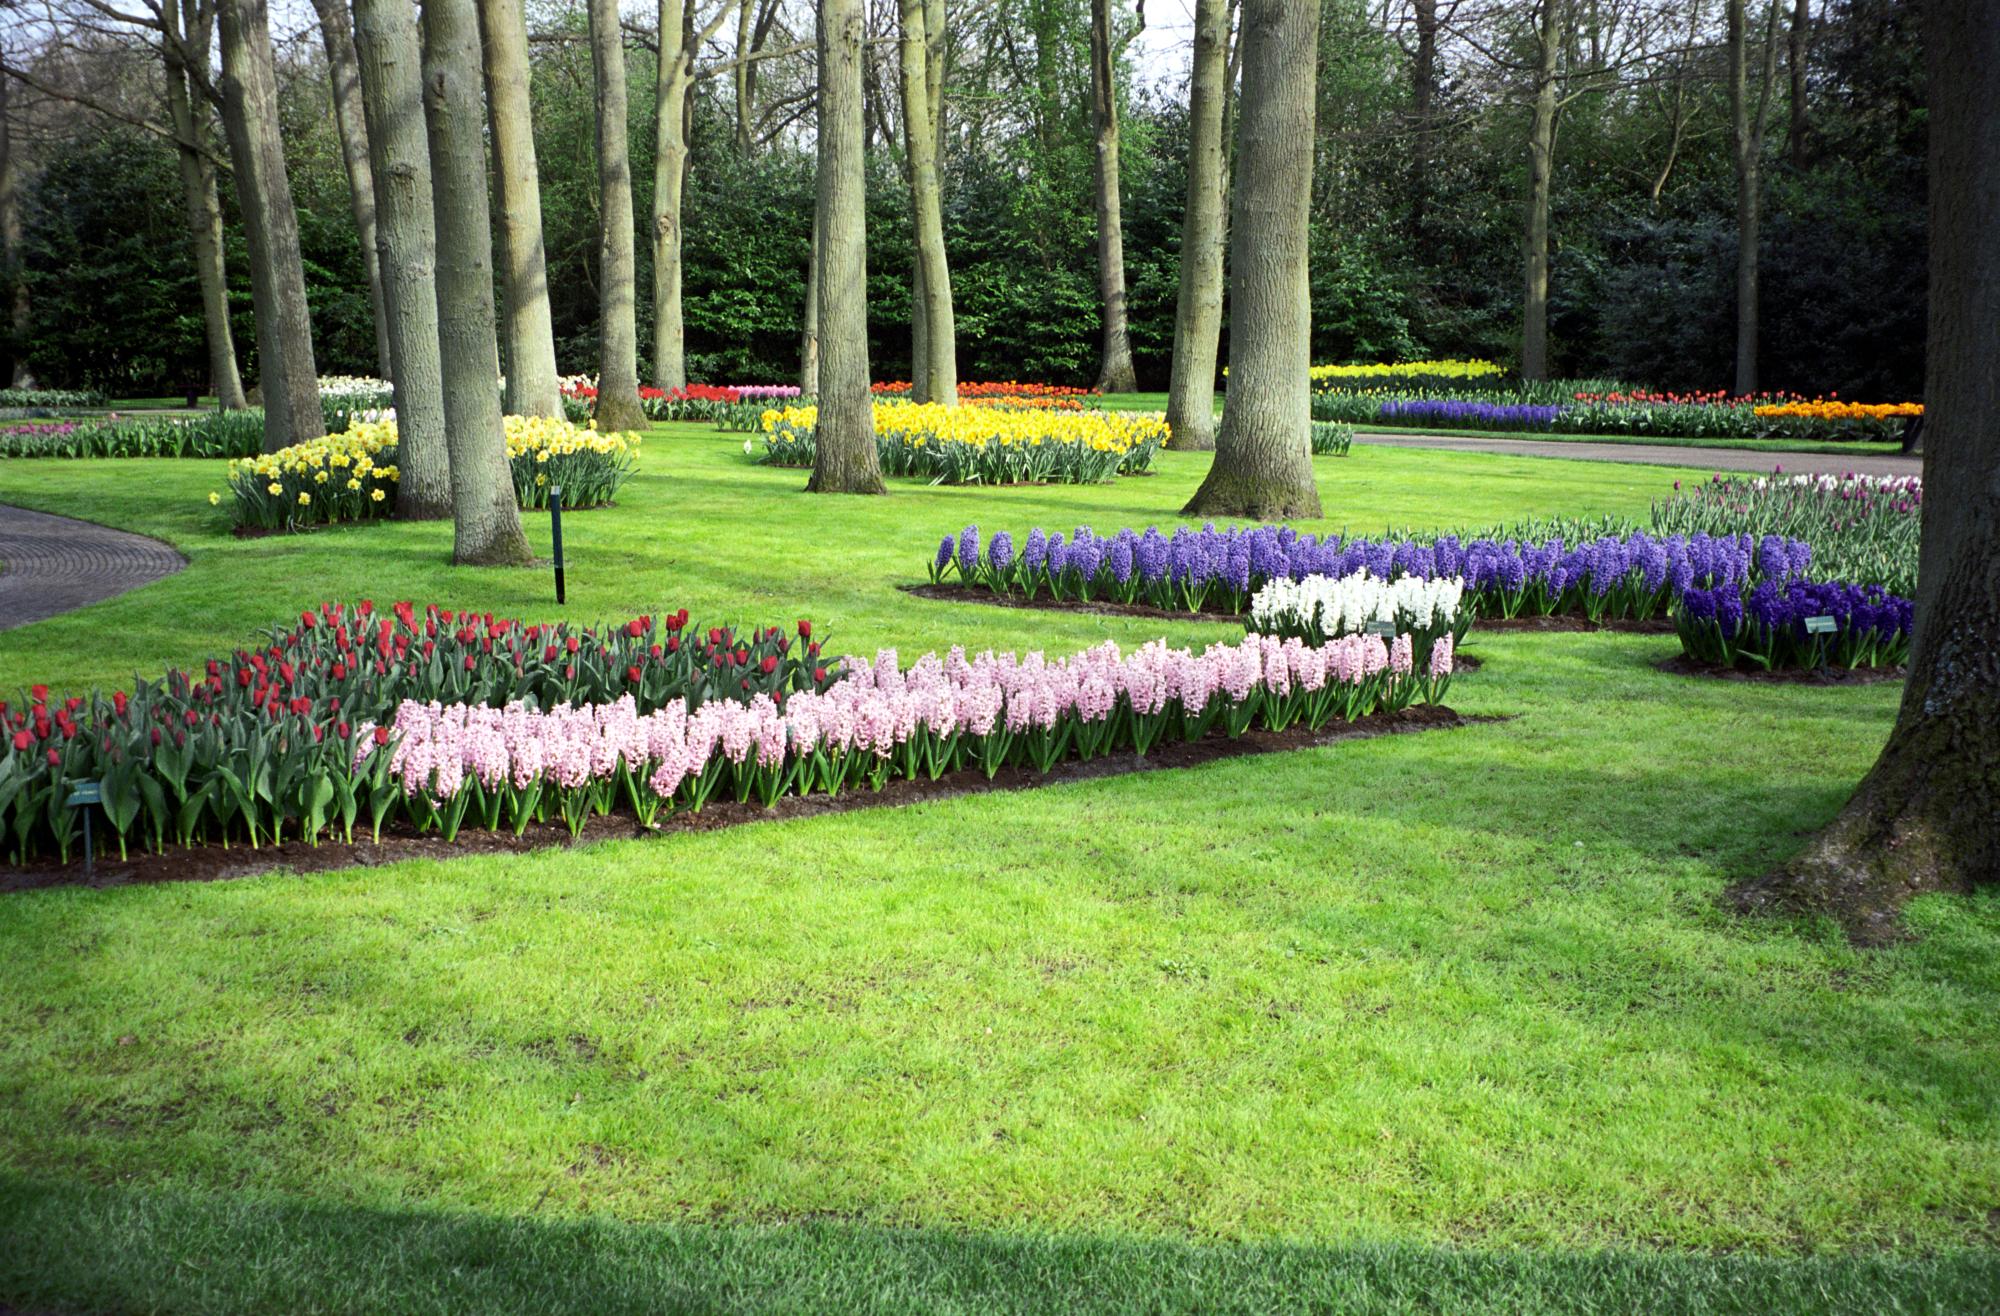 The Netherlands - Keukenhof Gardens #5